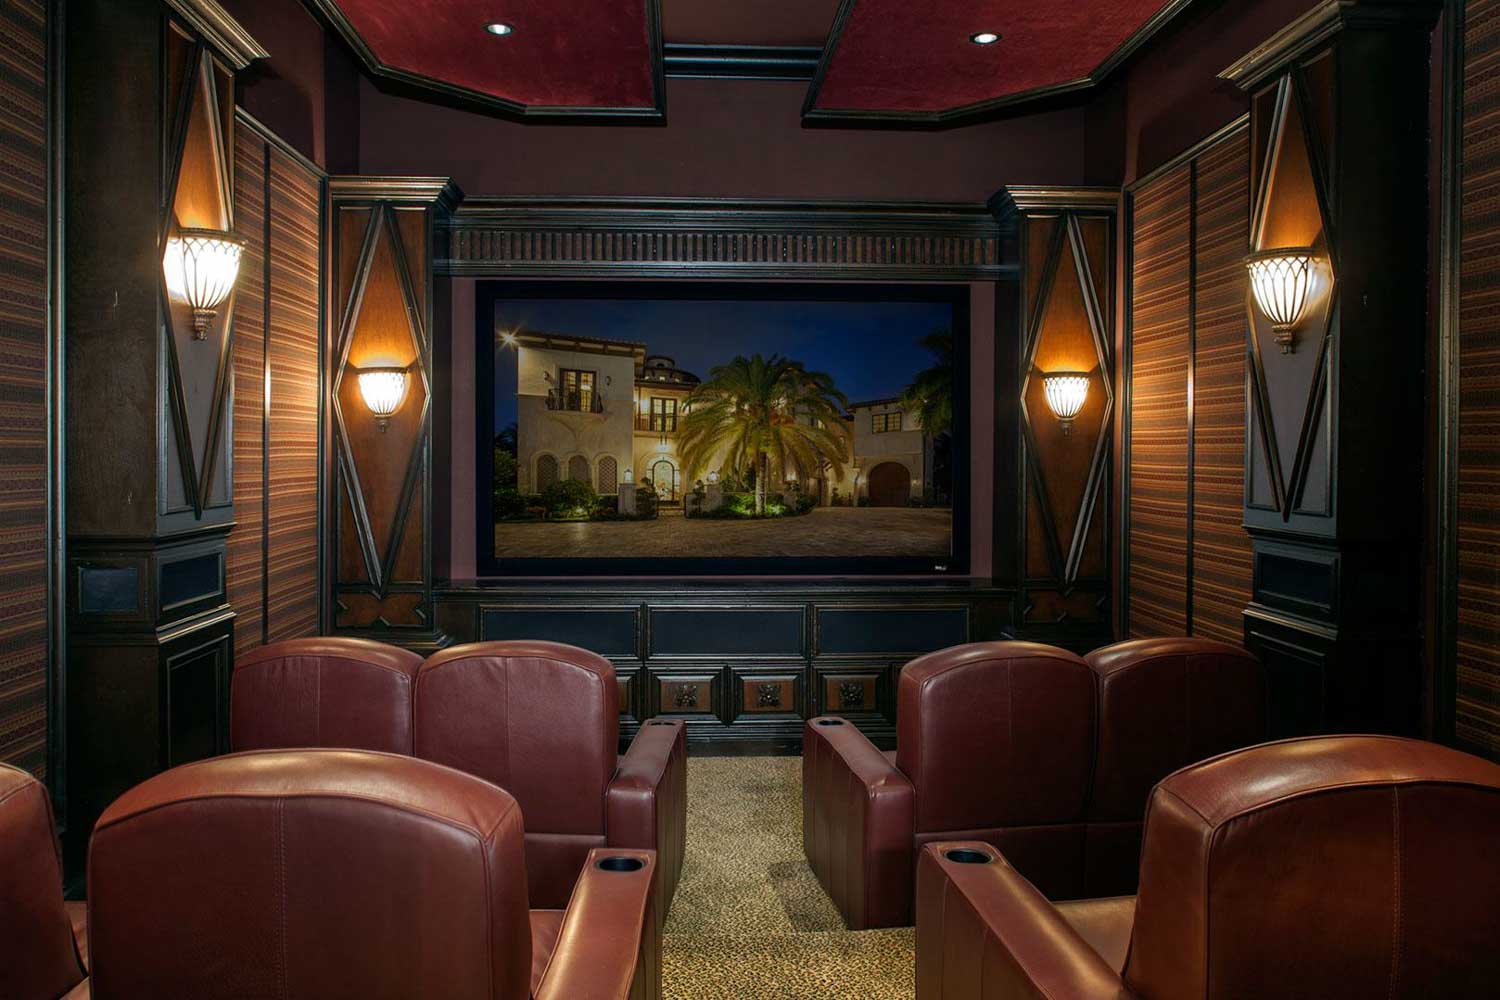 17828 Scarsdale Way - Interior of Estate Movie Theatre